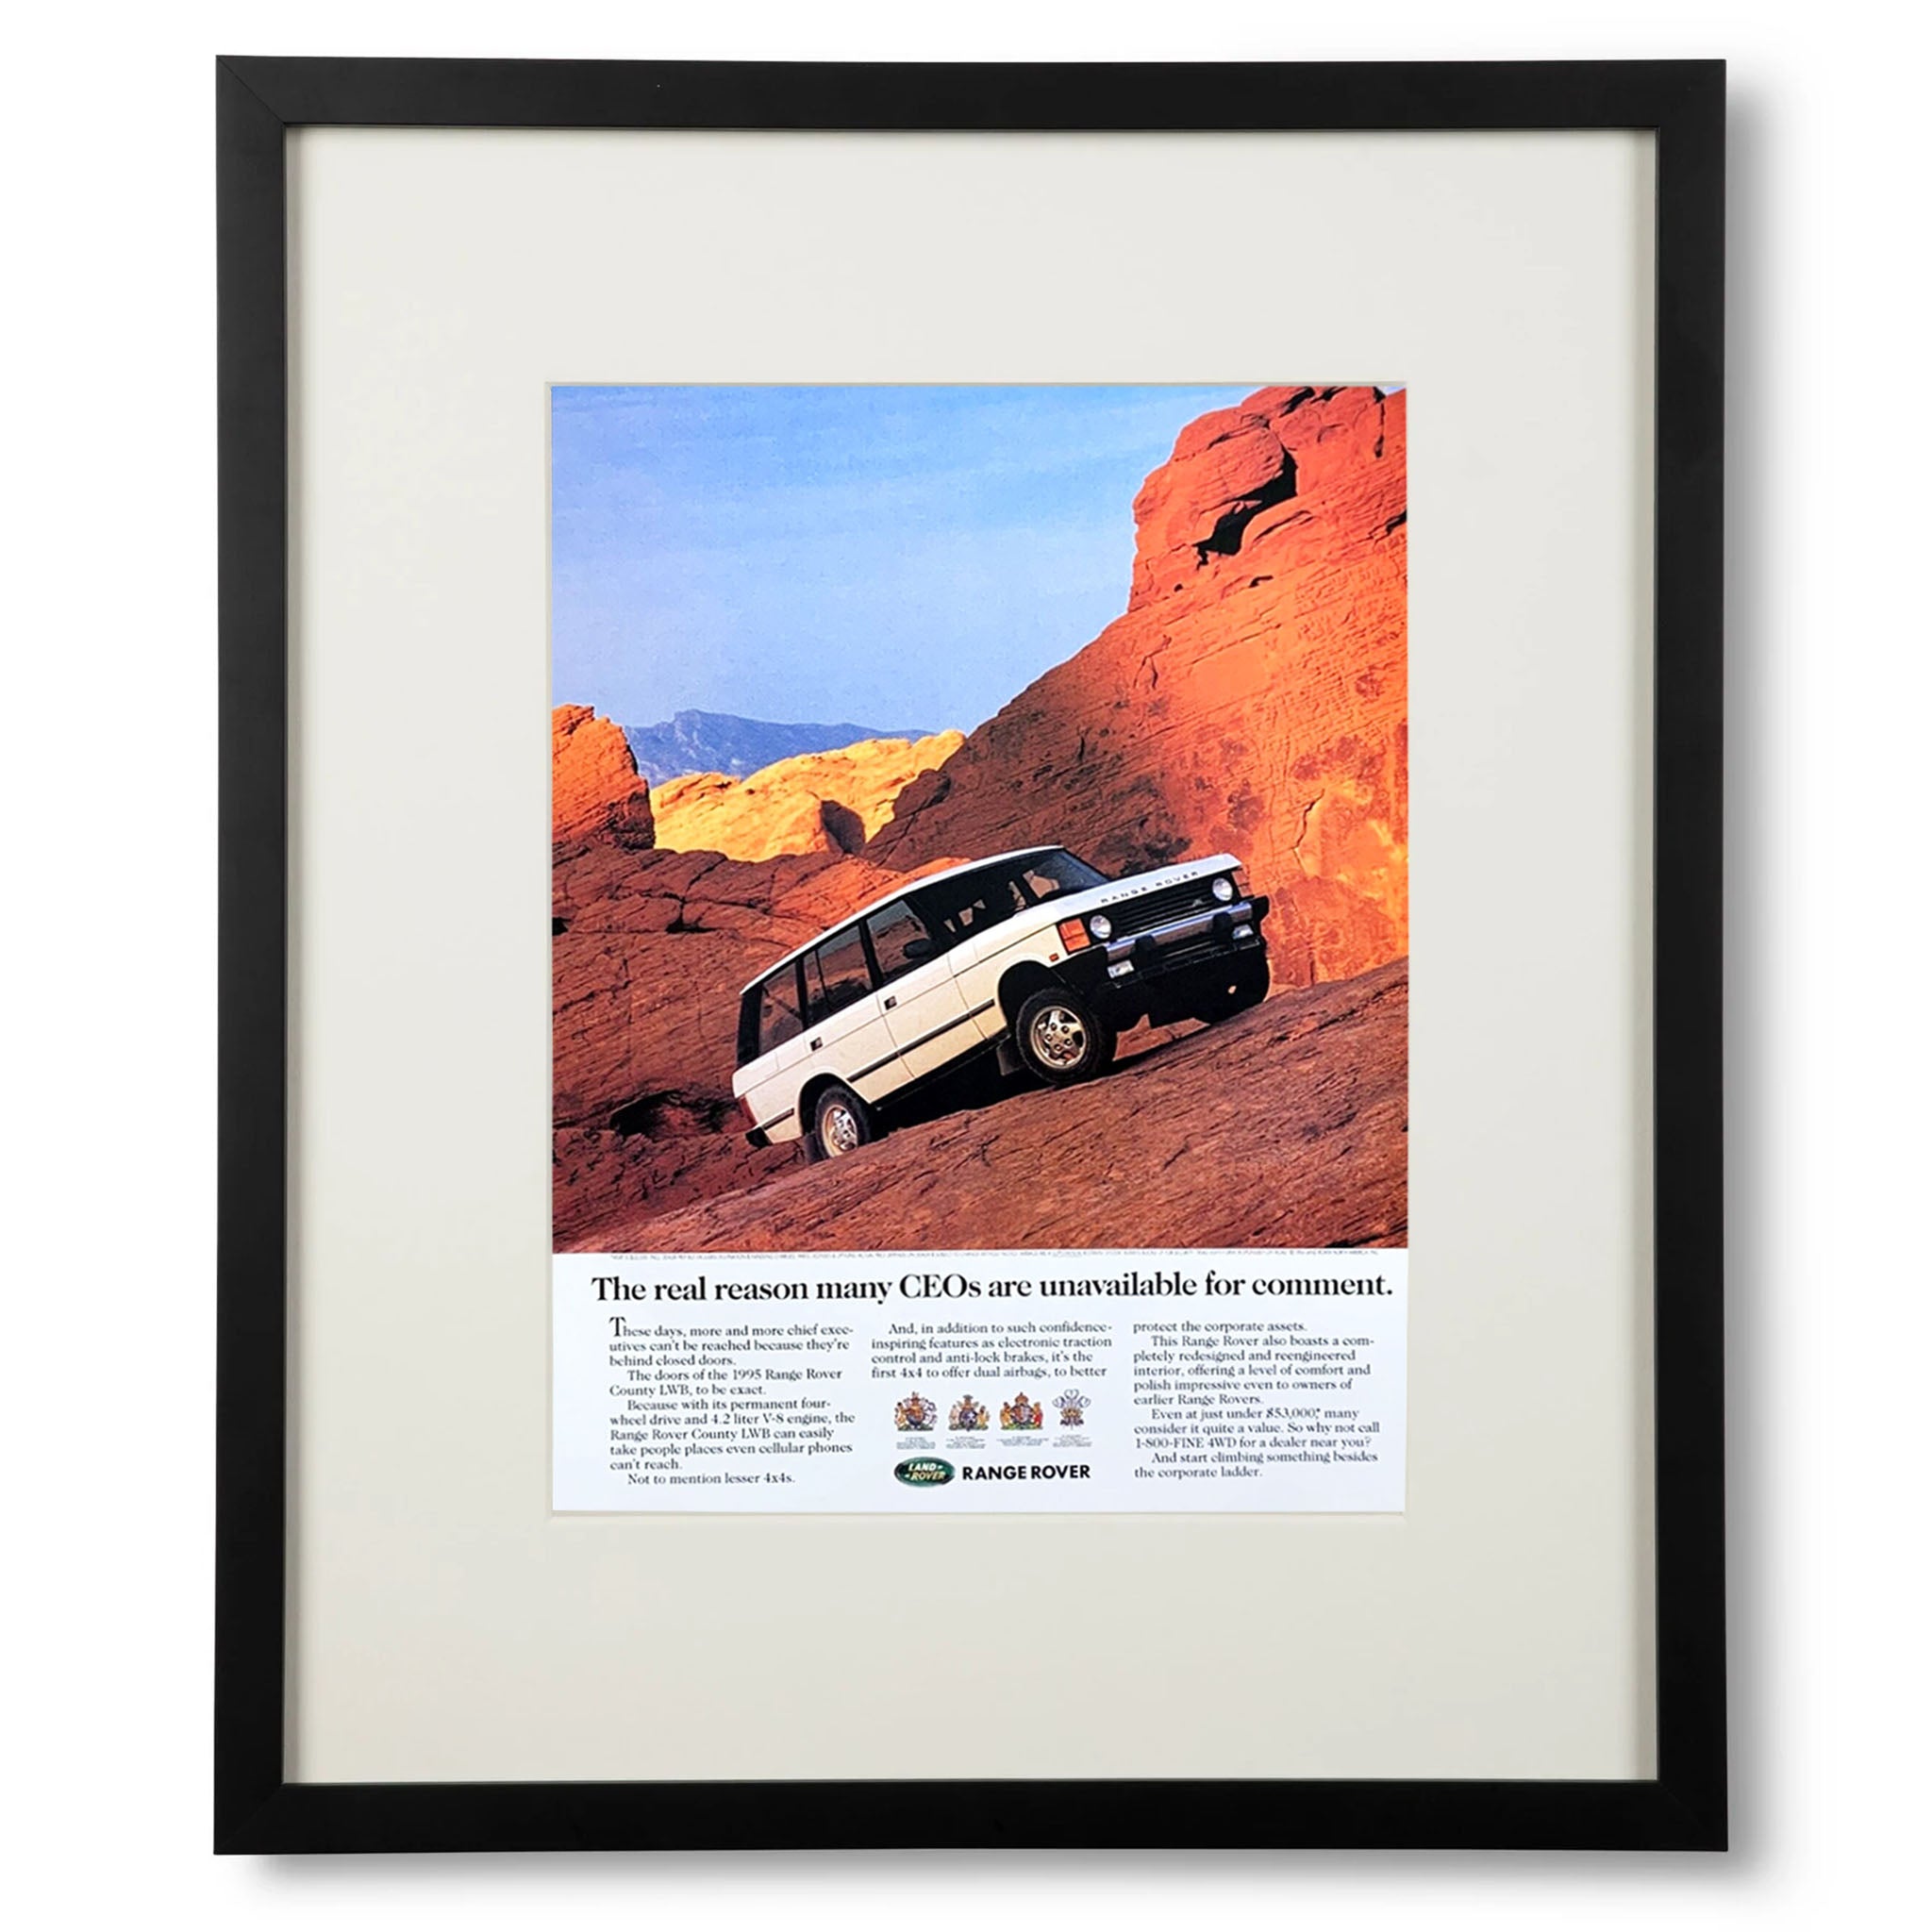 Framed Range Rover Reason CEOs Unavailable Advertisement